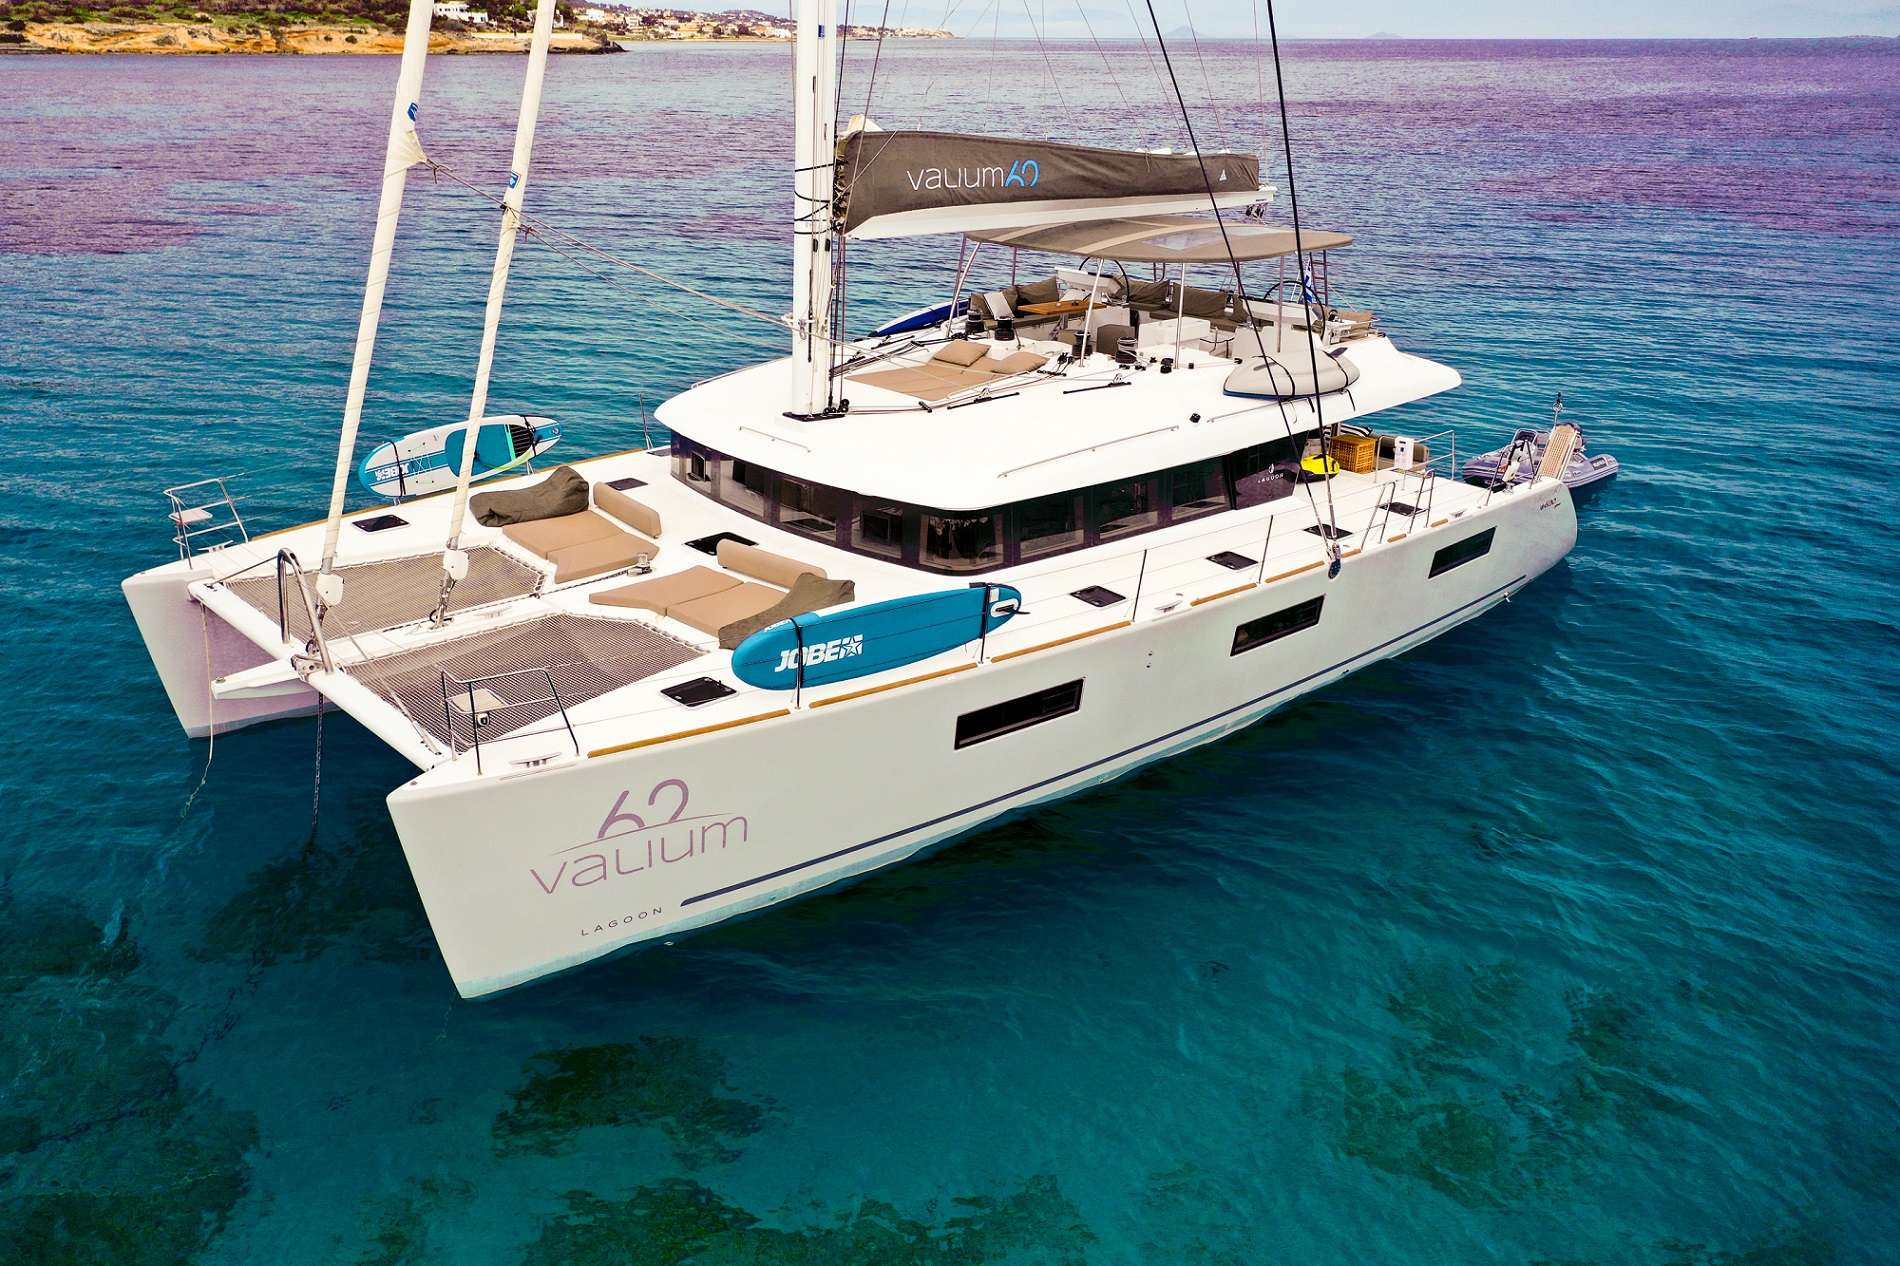 valium62 - Yacht Charter Kalamata & Boat hire in Greece 2